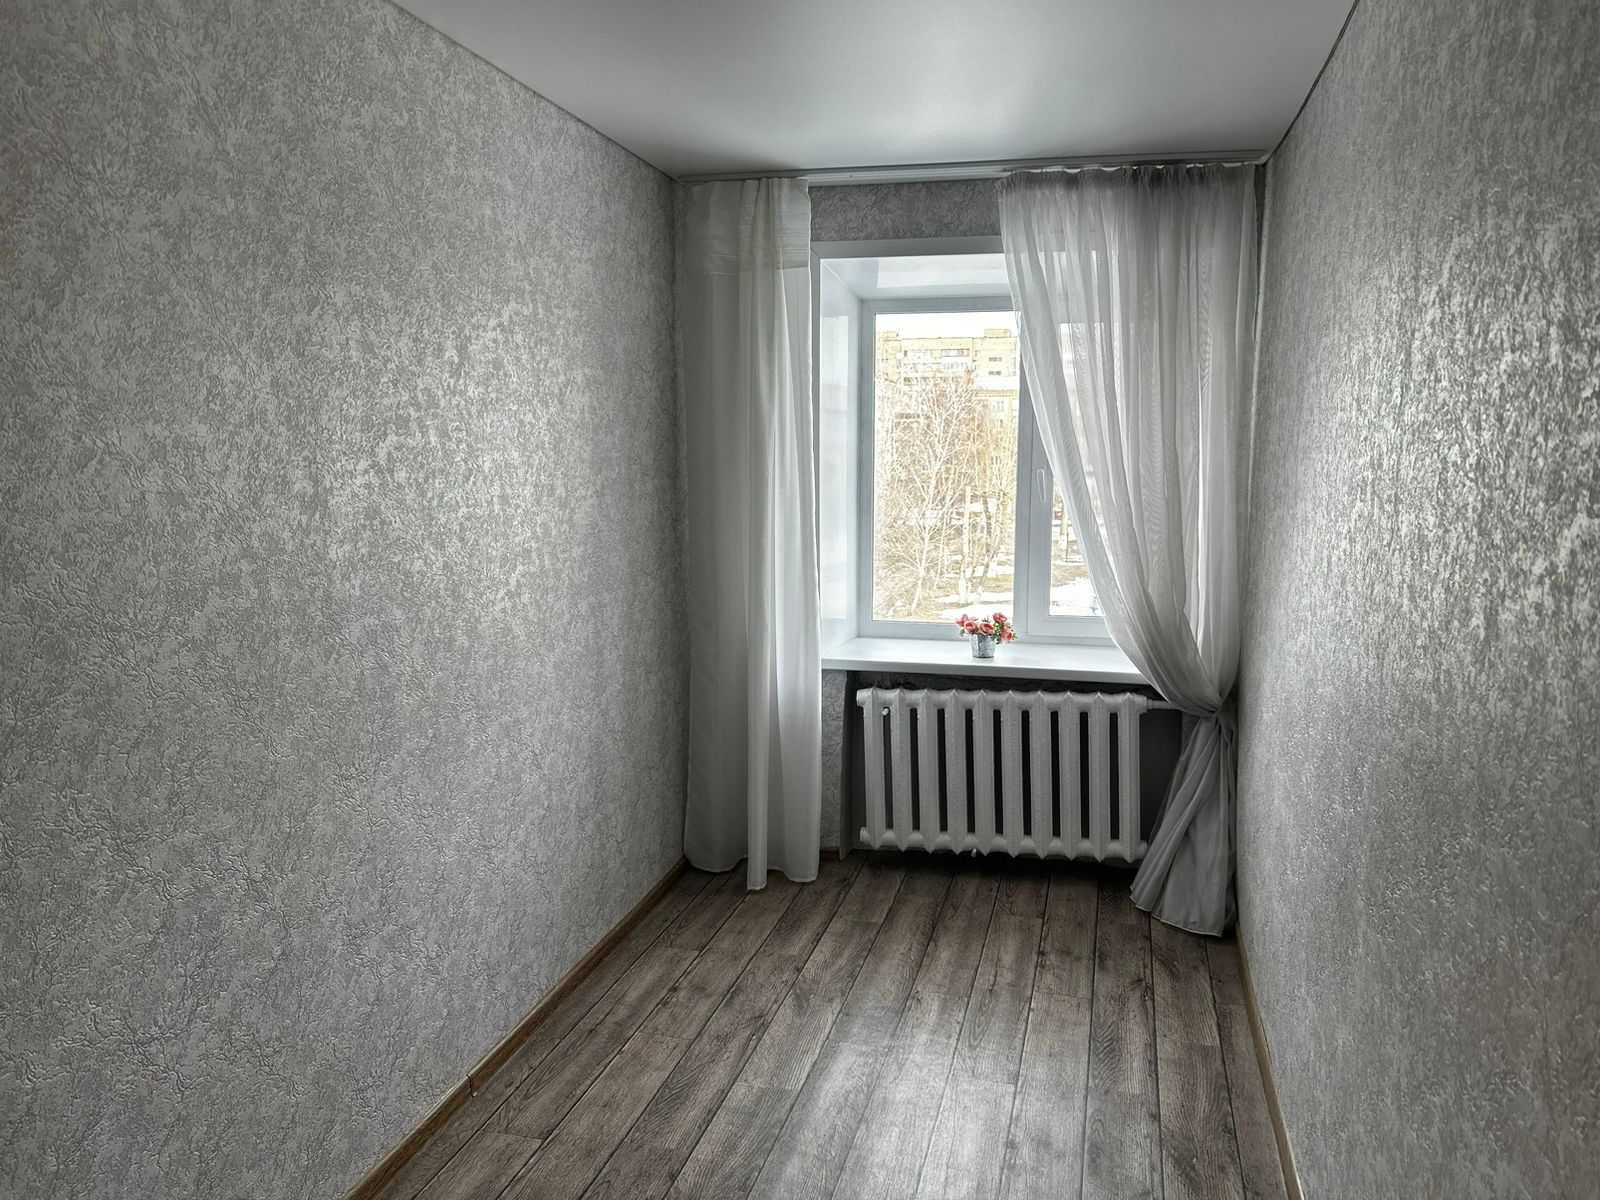 2 комнатная квартира район бородинский